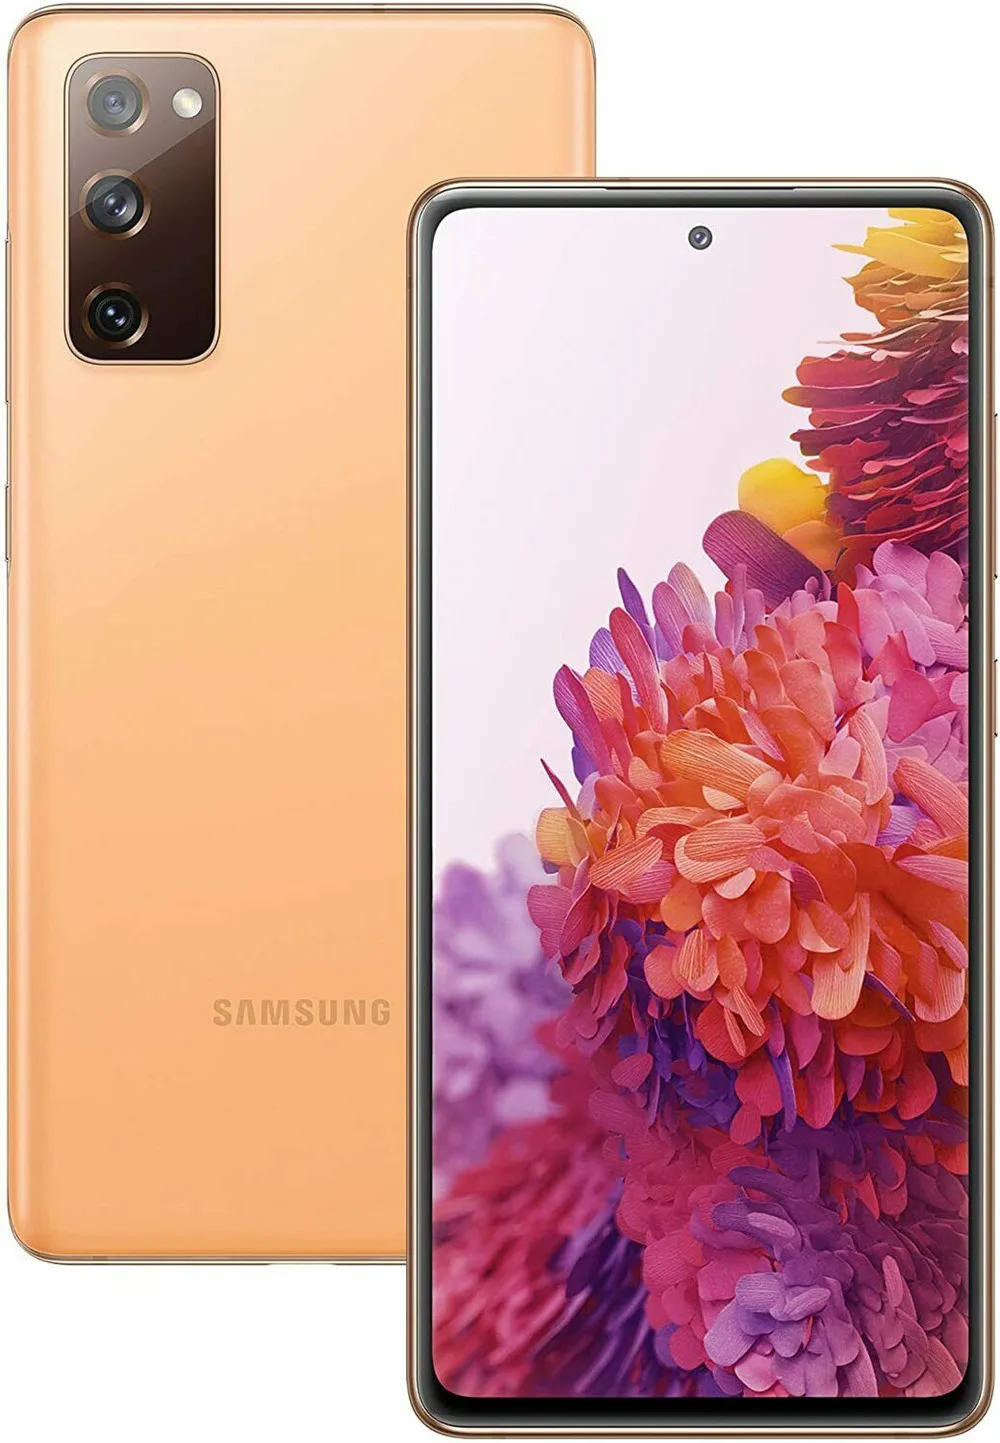 iphone 11 refurbished Samsung Galaxy S20 FE S20 Lite 5G G781U1 G781U1/DS 6.5" ROM 128GB RAM 6GB Snapdragon NFC Original S20FE 5G Unlocked Cell Phone refurbished samsung Refurbished Phones